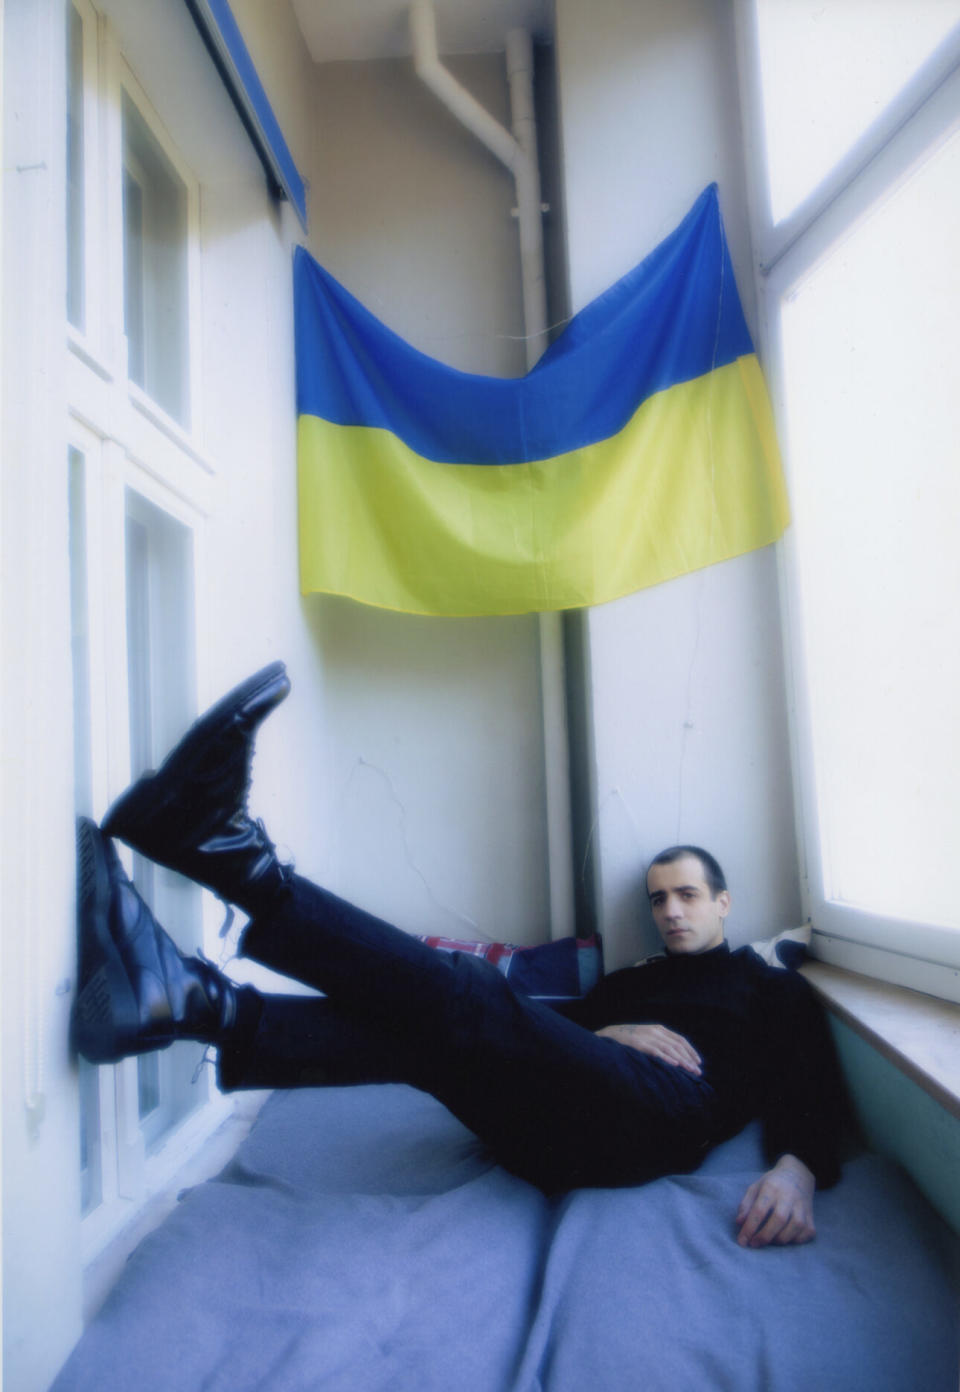 Morwan reclines in front of a Ukrainian flag that he hangs from his balcony (Photo credit: Nastya Platinova)